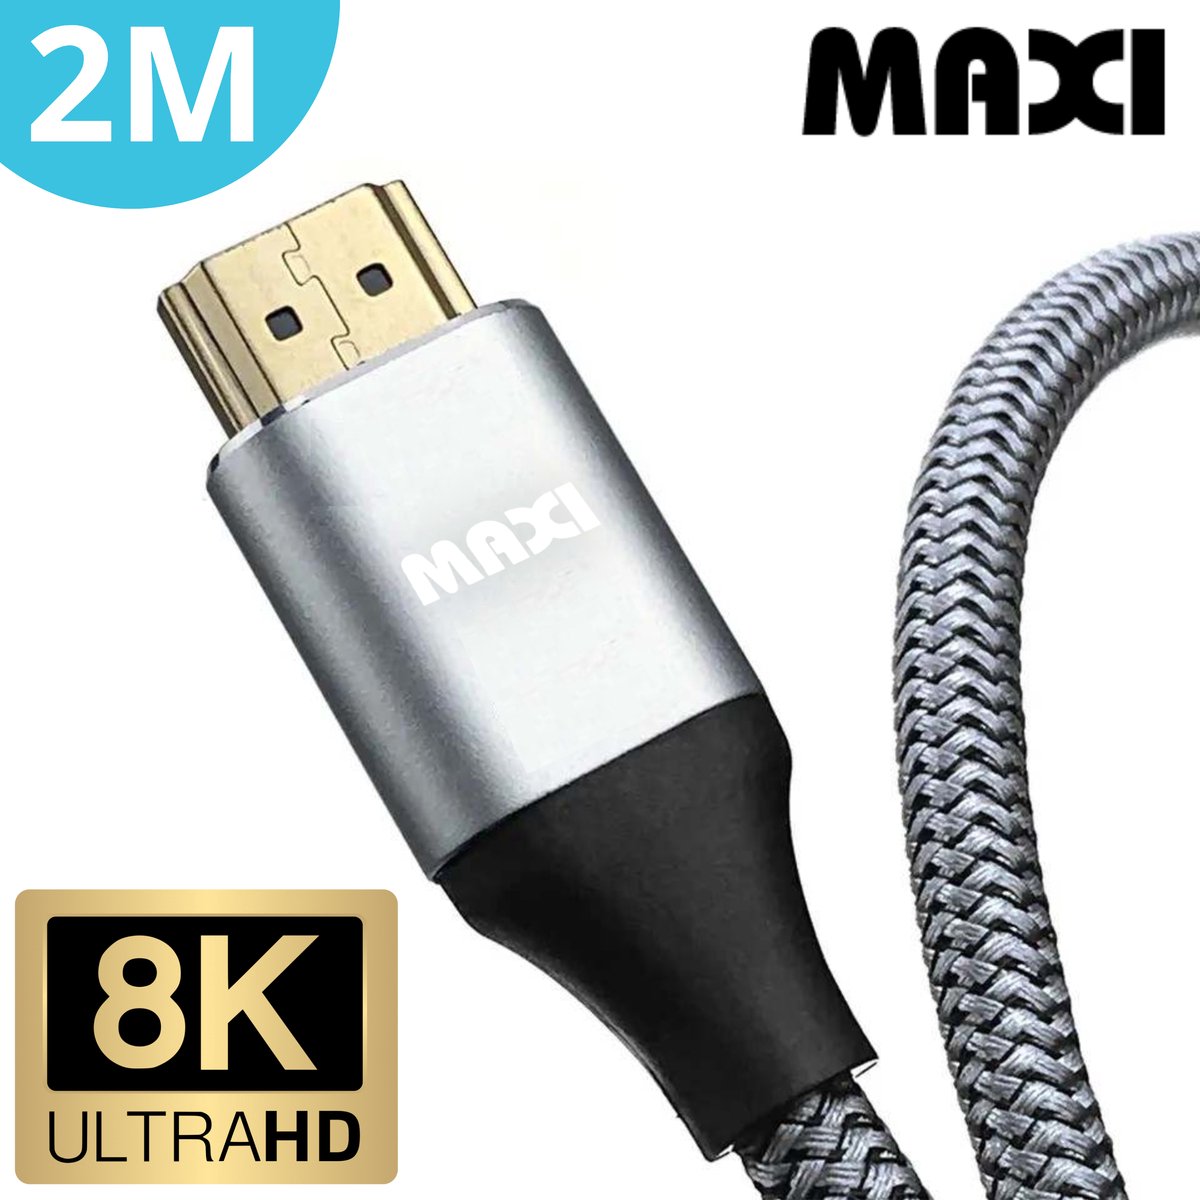 Maximania HDMI kabel 2 meter – HDMI 2.1 - Hdmi naar hdmi – 8k UHD - 4K UHD – Xbox – Ps5 – High speed HDMI